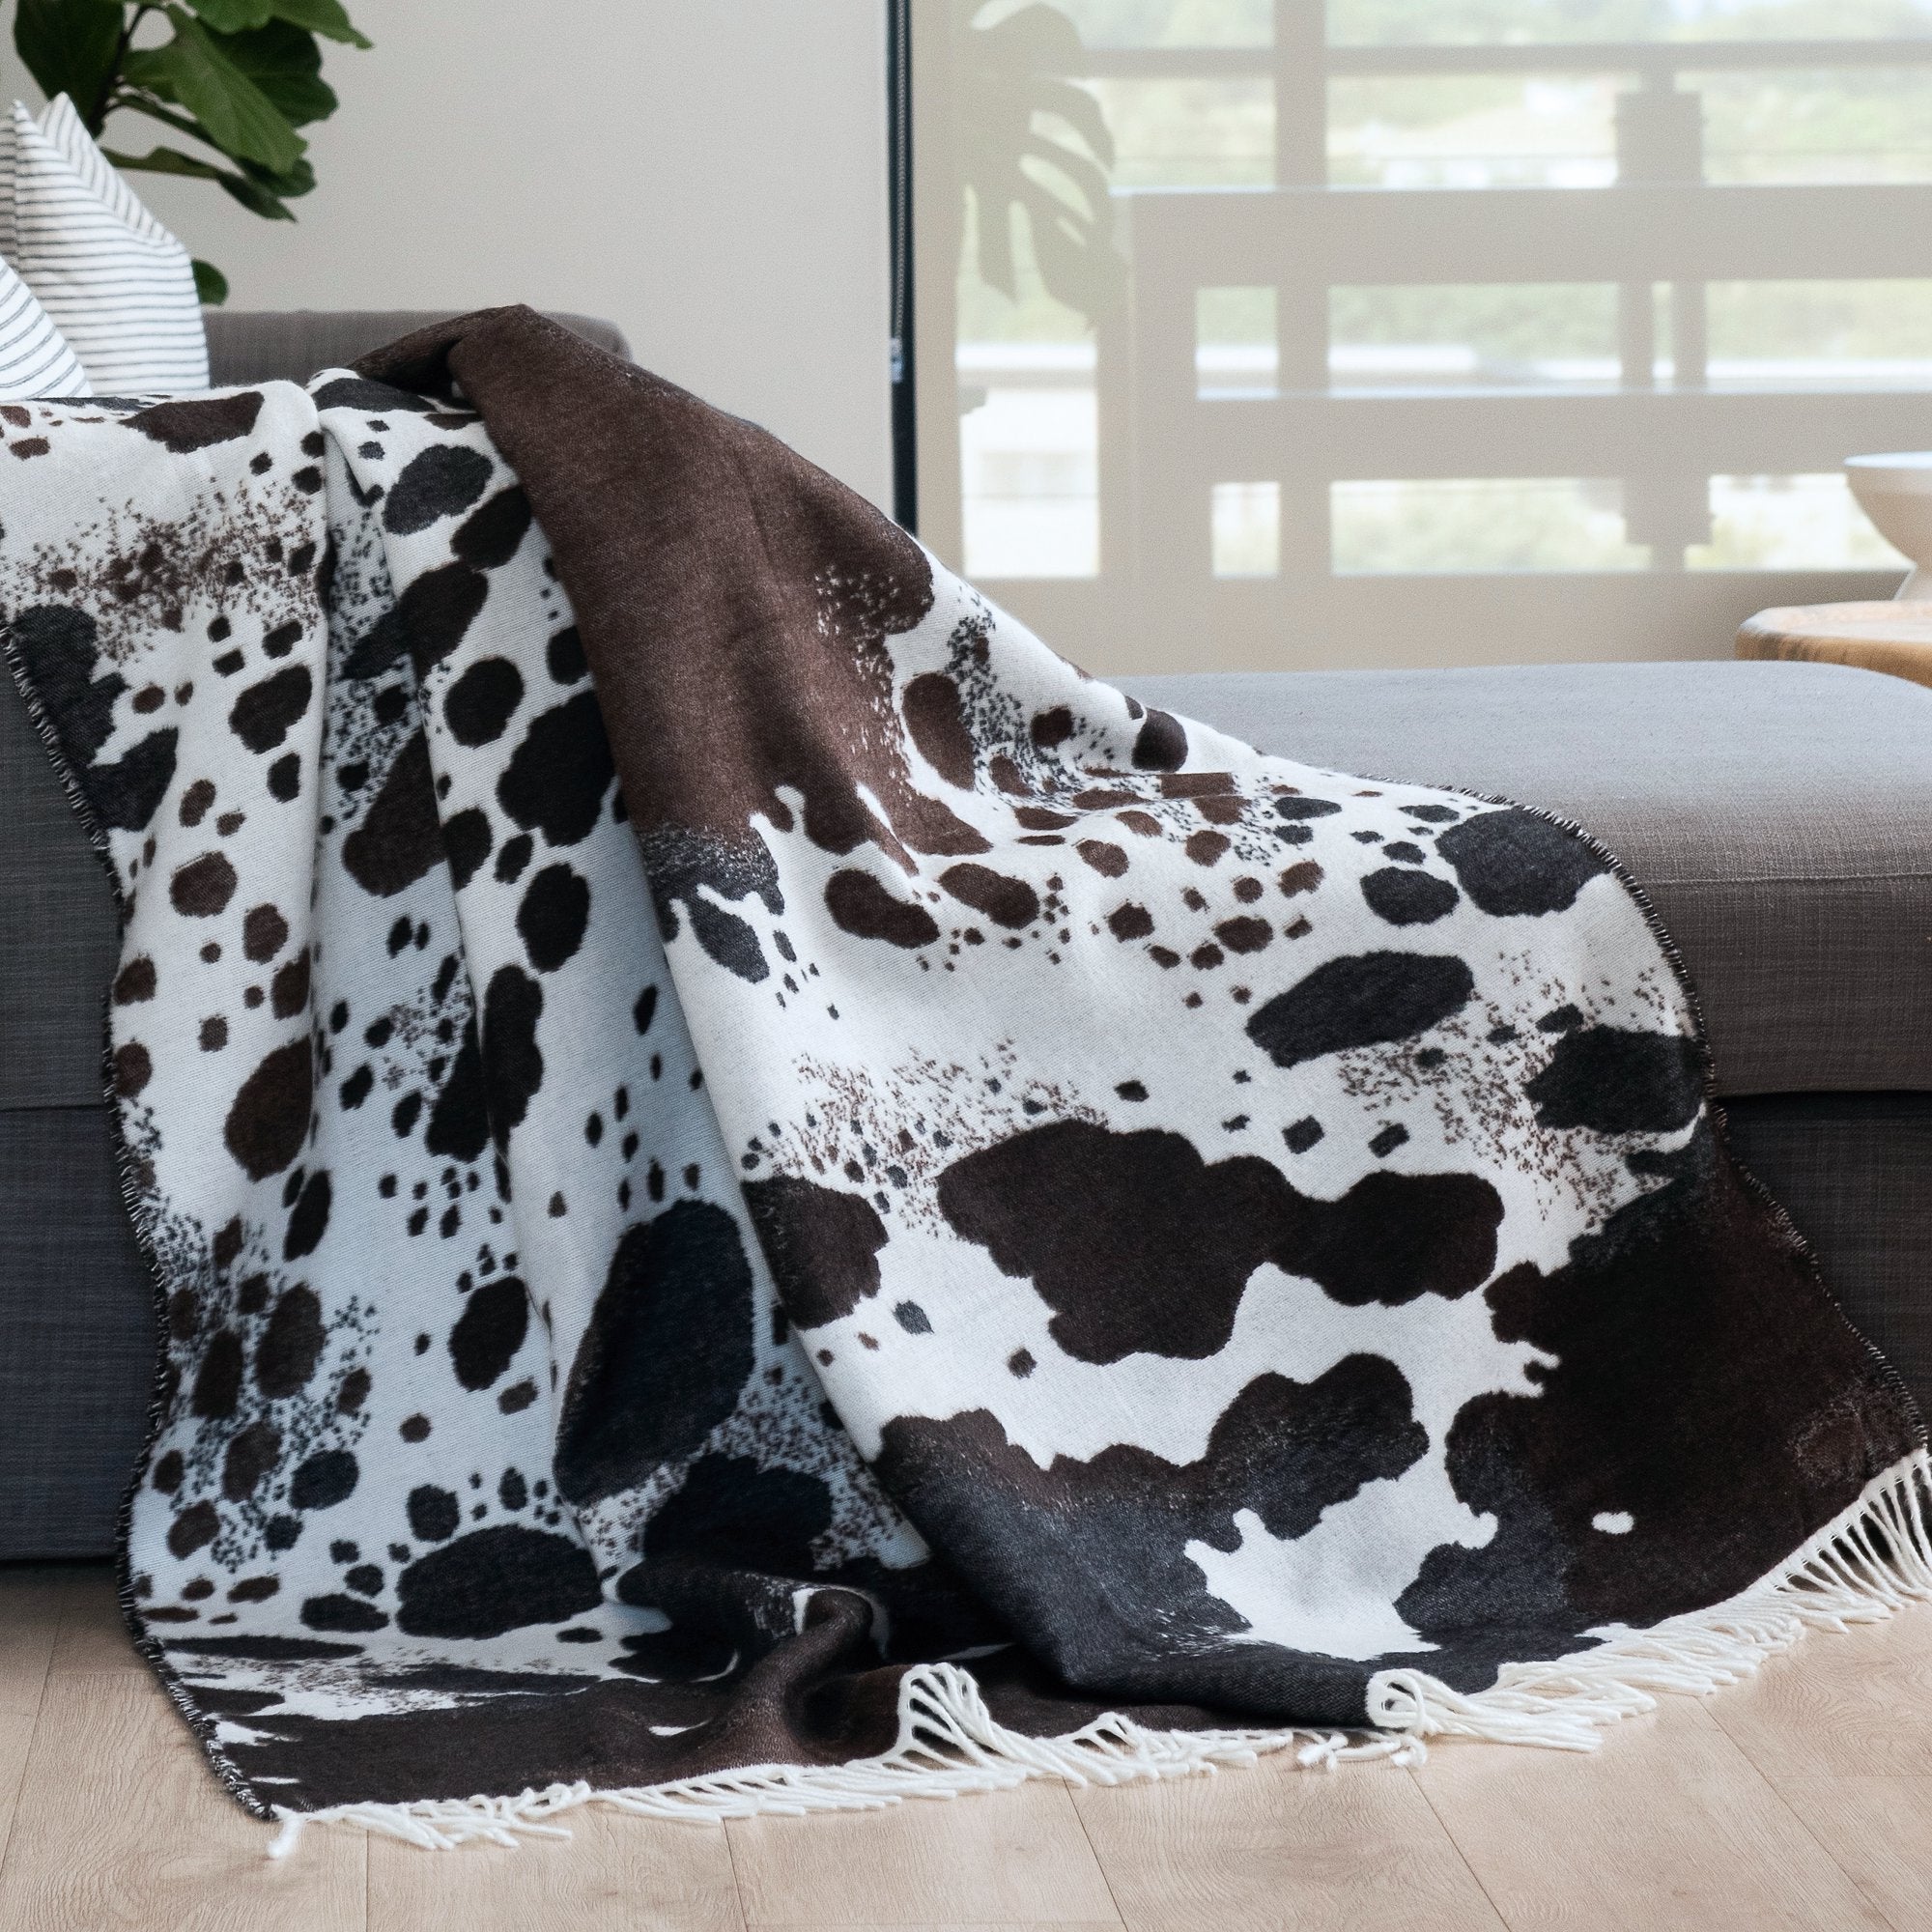 Cozy African sofa blanket - Ishango - 180 x 140 cm